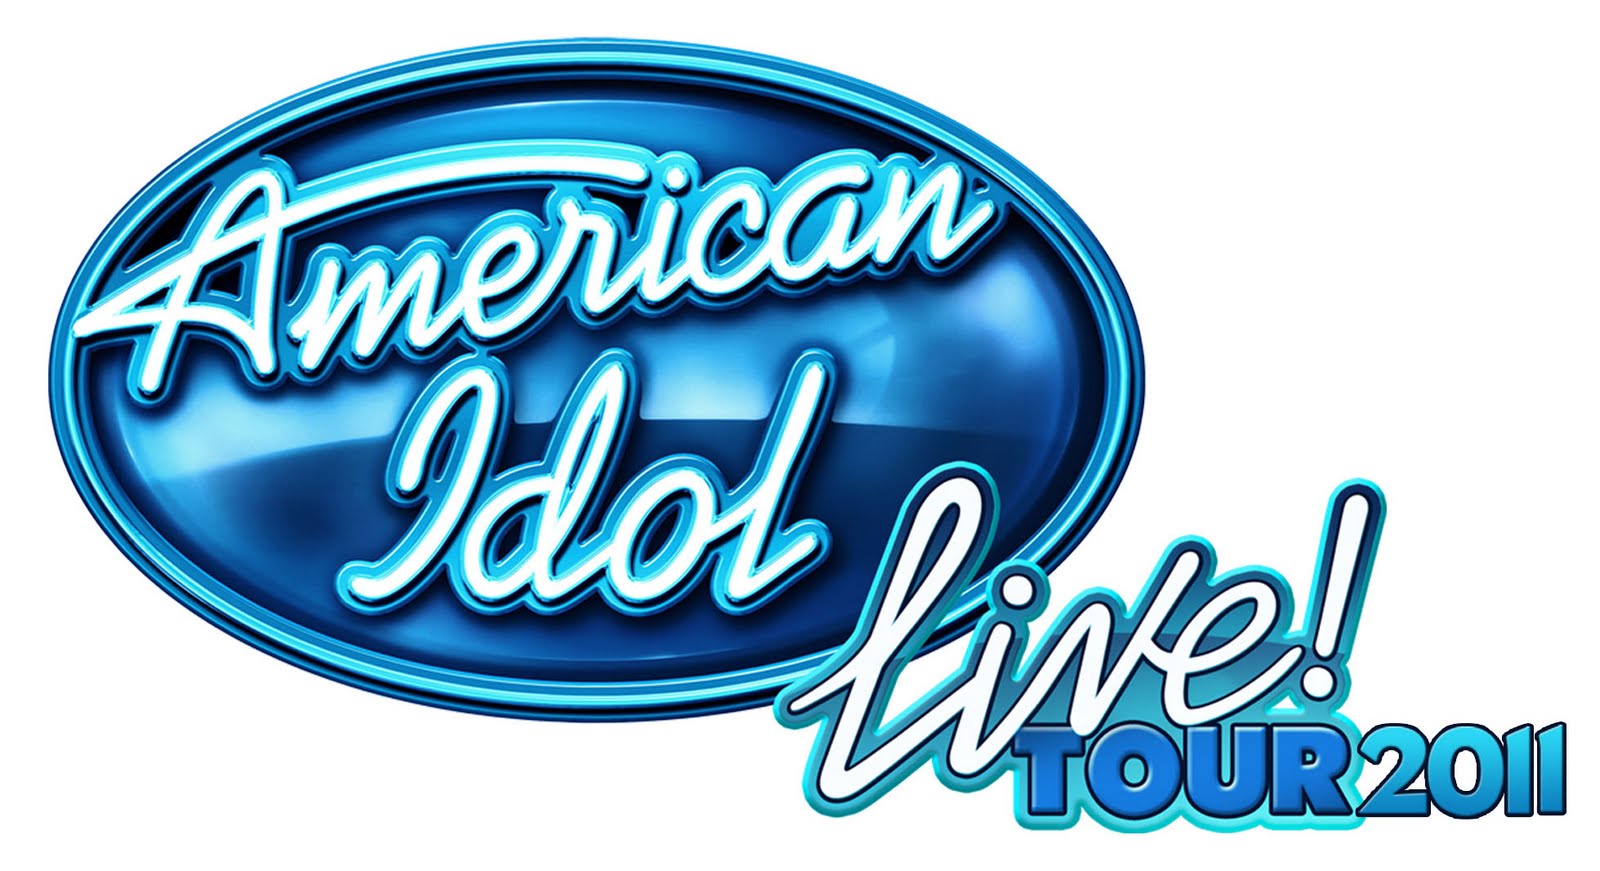 Final+contestants+on+american+idol+2011